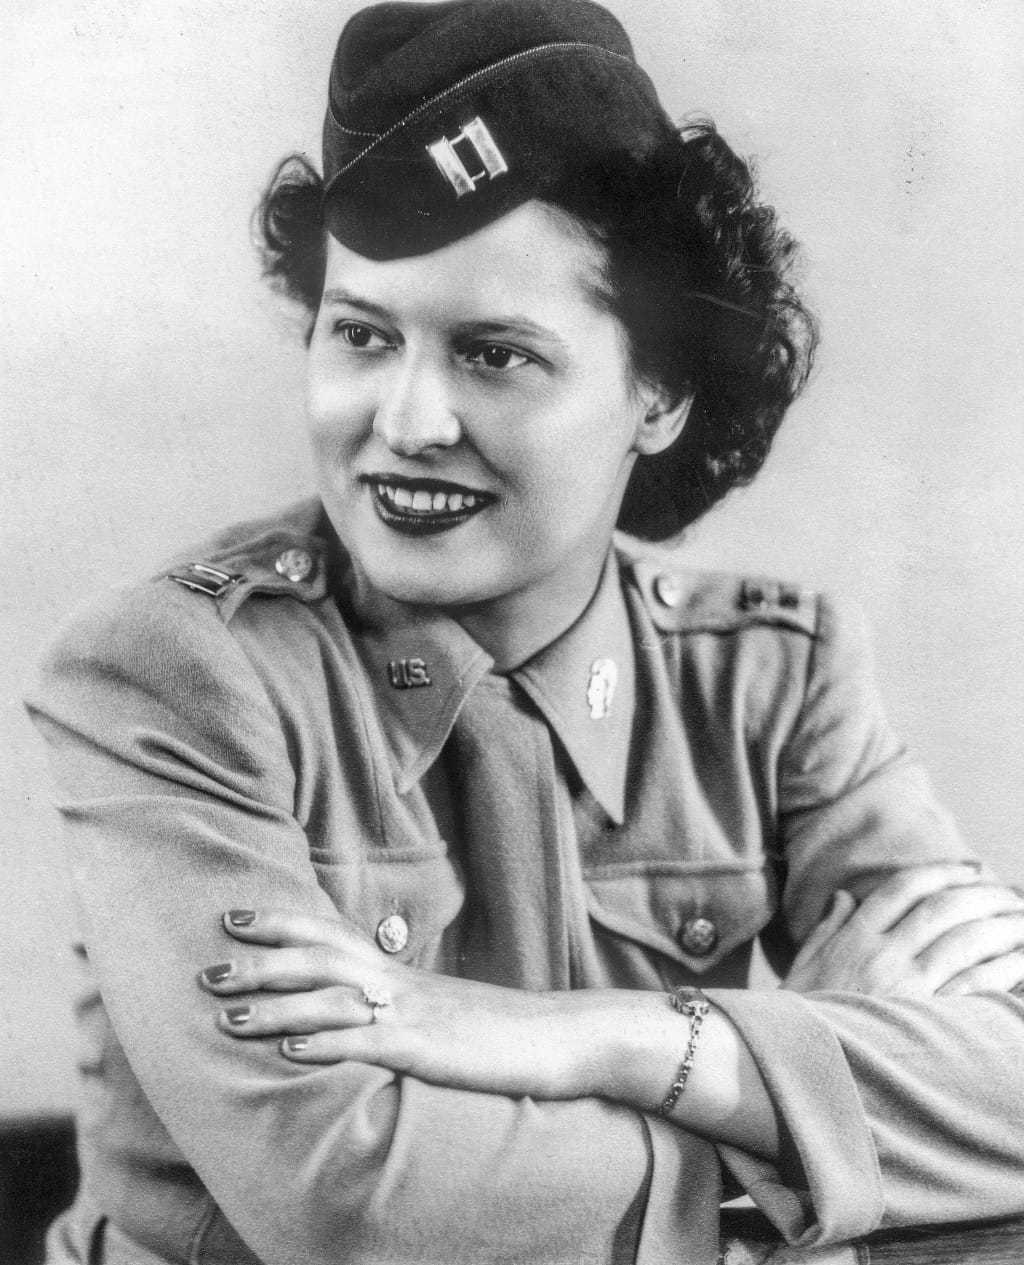 A black and white headshot of Stephanie in uniform.